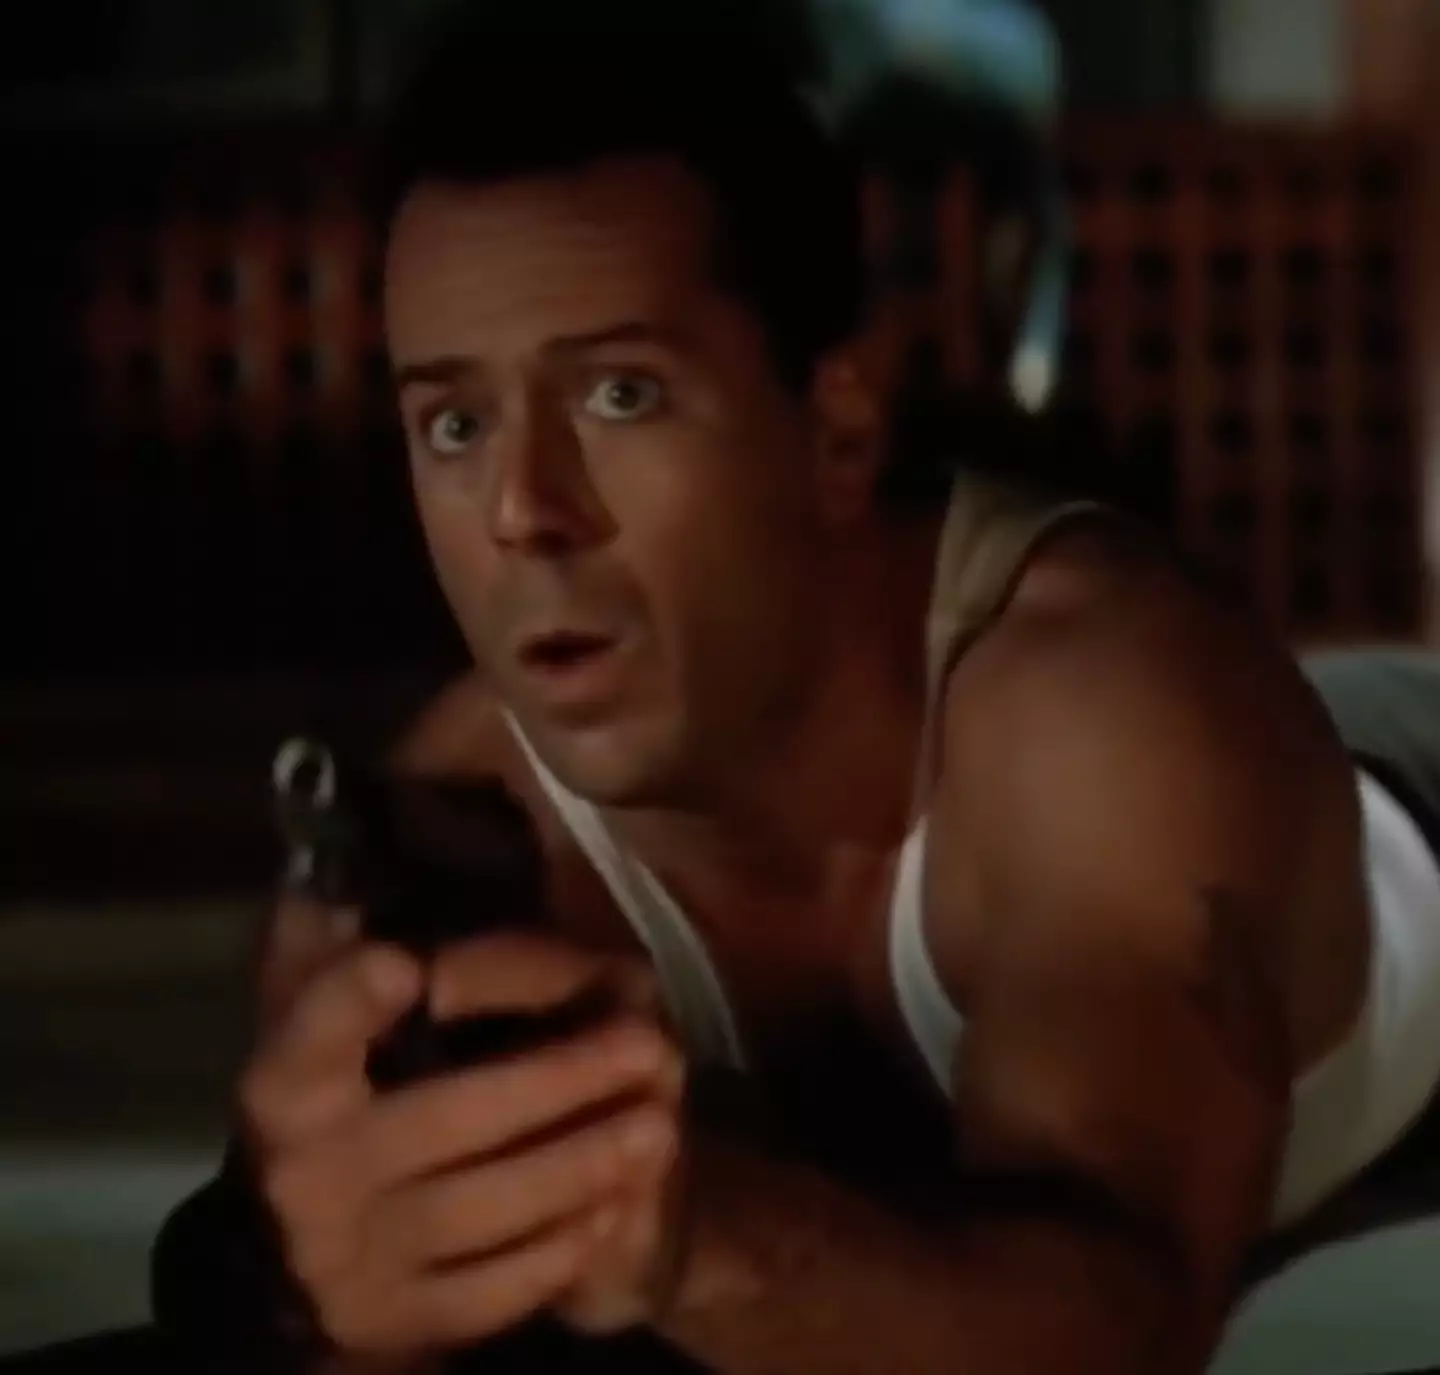 Bruce Willis as John McClane.